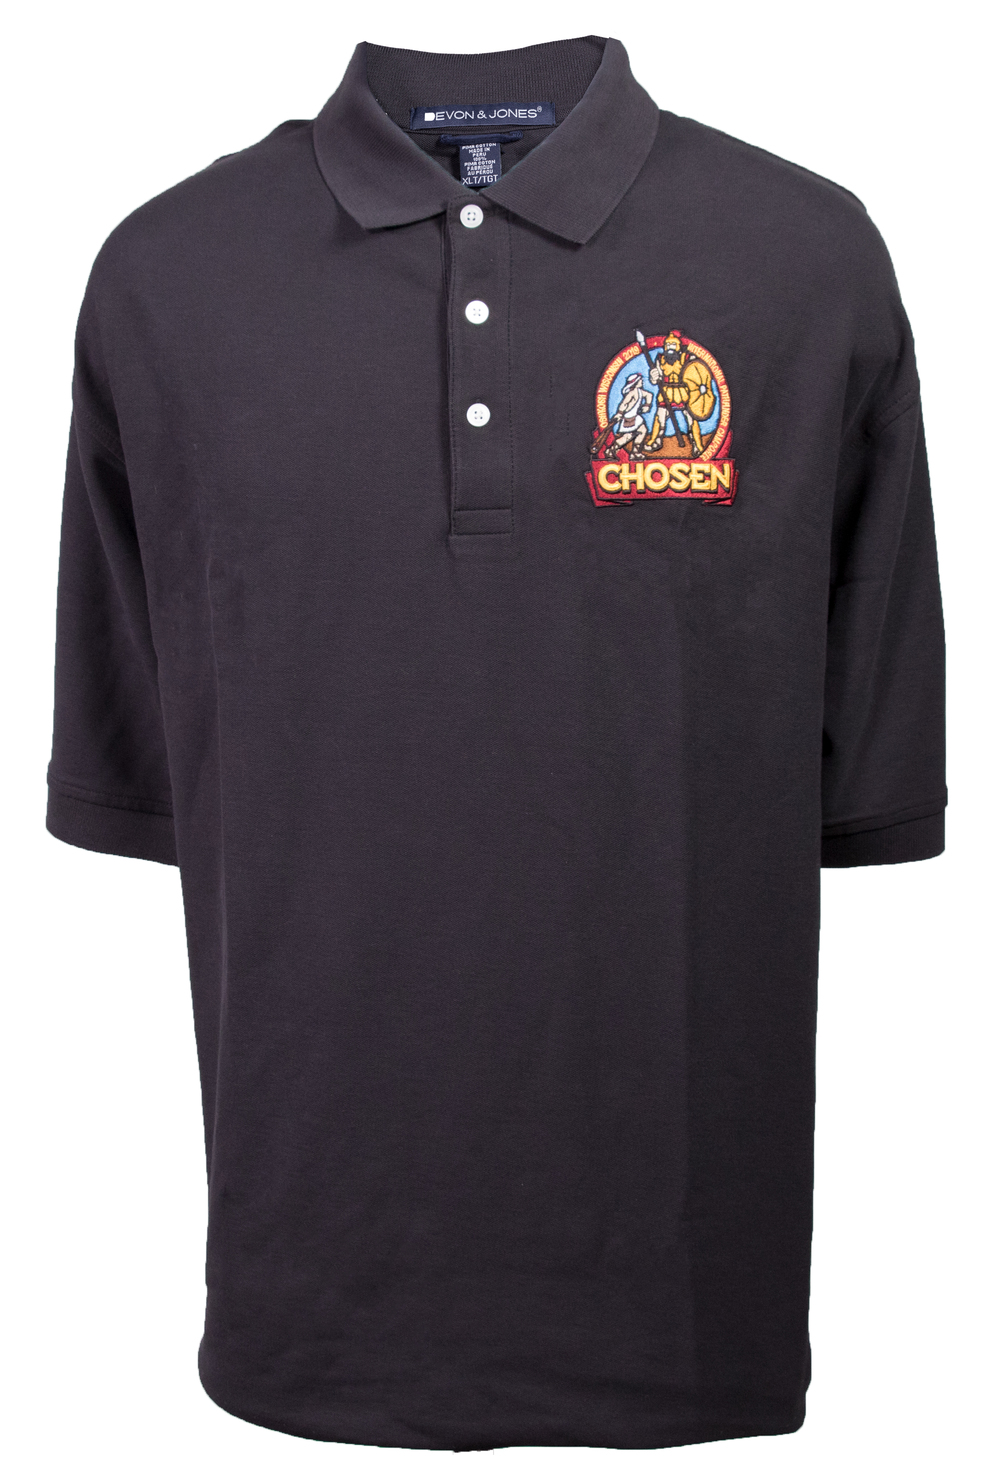 Chosen Men's Polo Shirt - Black